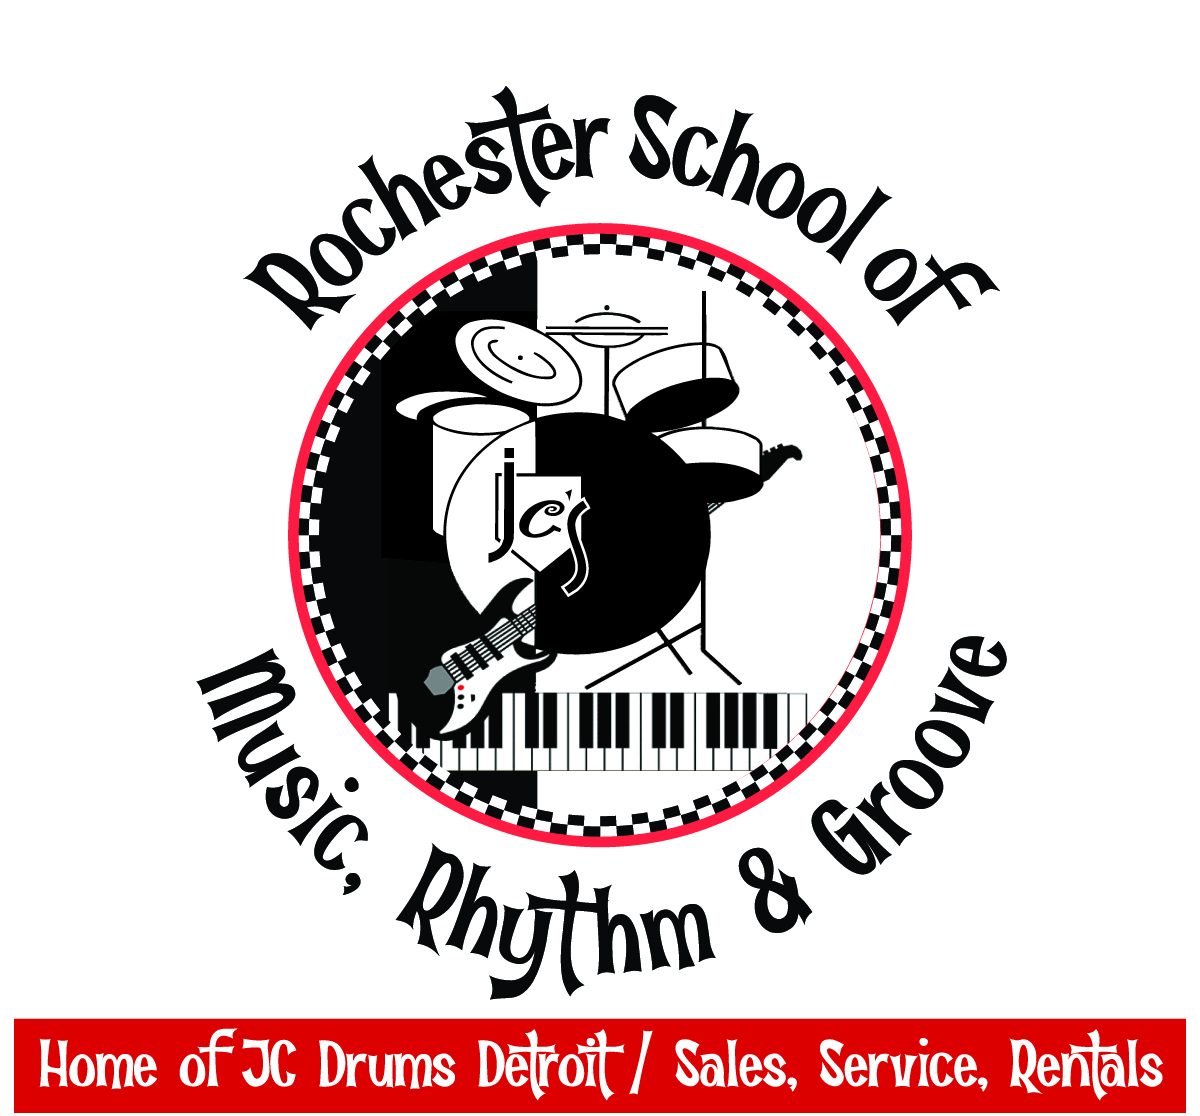 Rochester School of Music